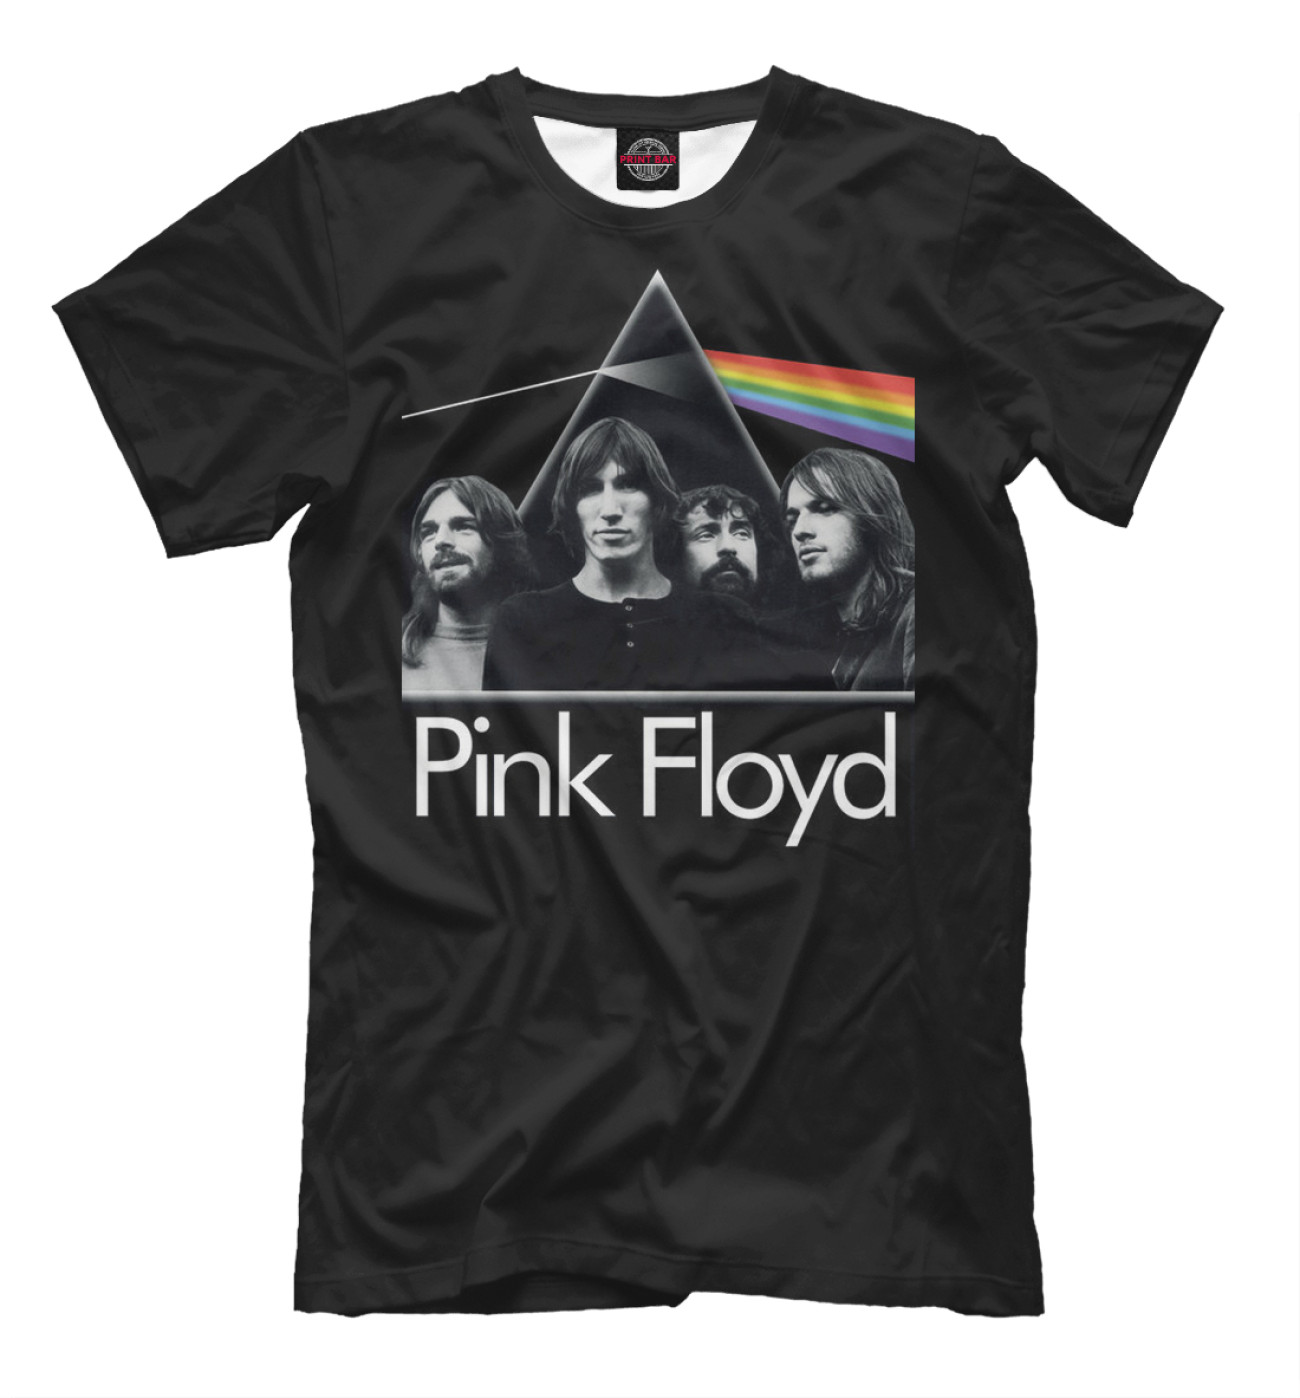 Мужская Футболка Pink Floyd, артикул: PFL-709310-fut-2